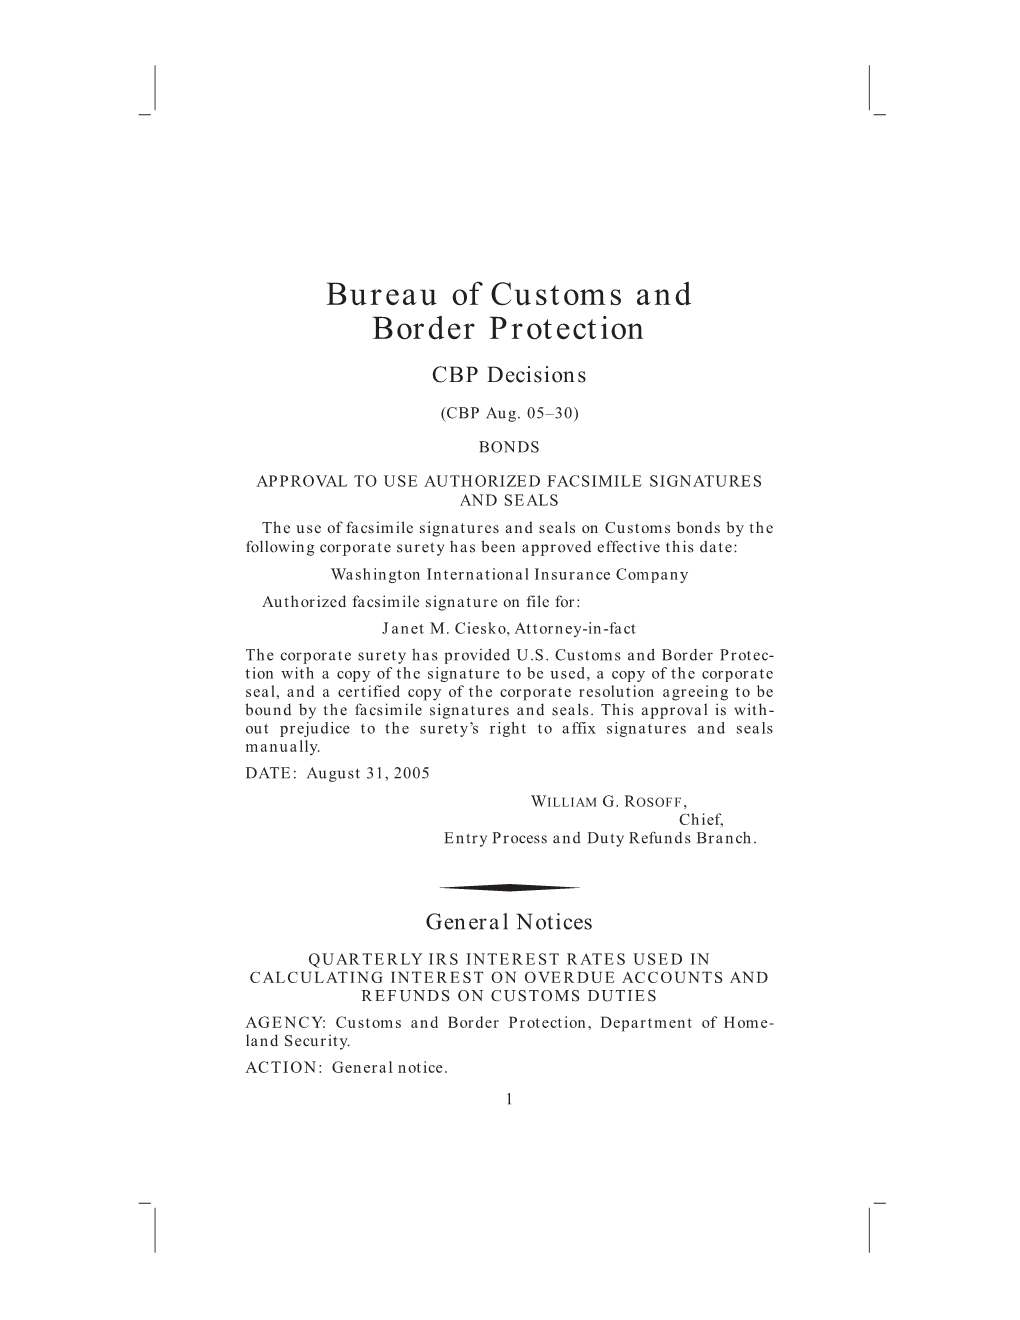 Bureau of Customs and Border Protection CBP Decisions